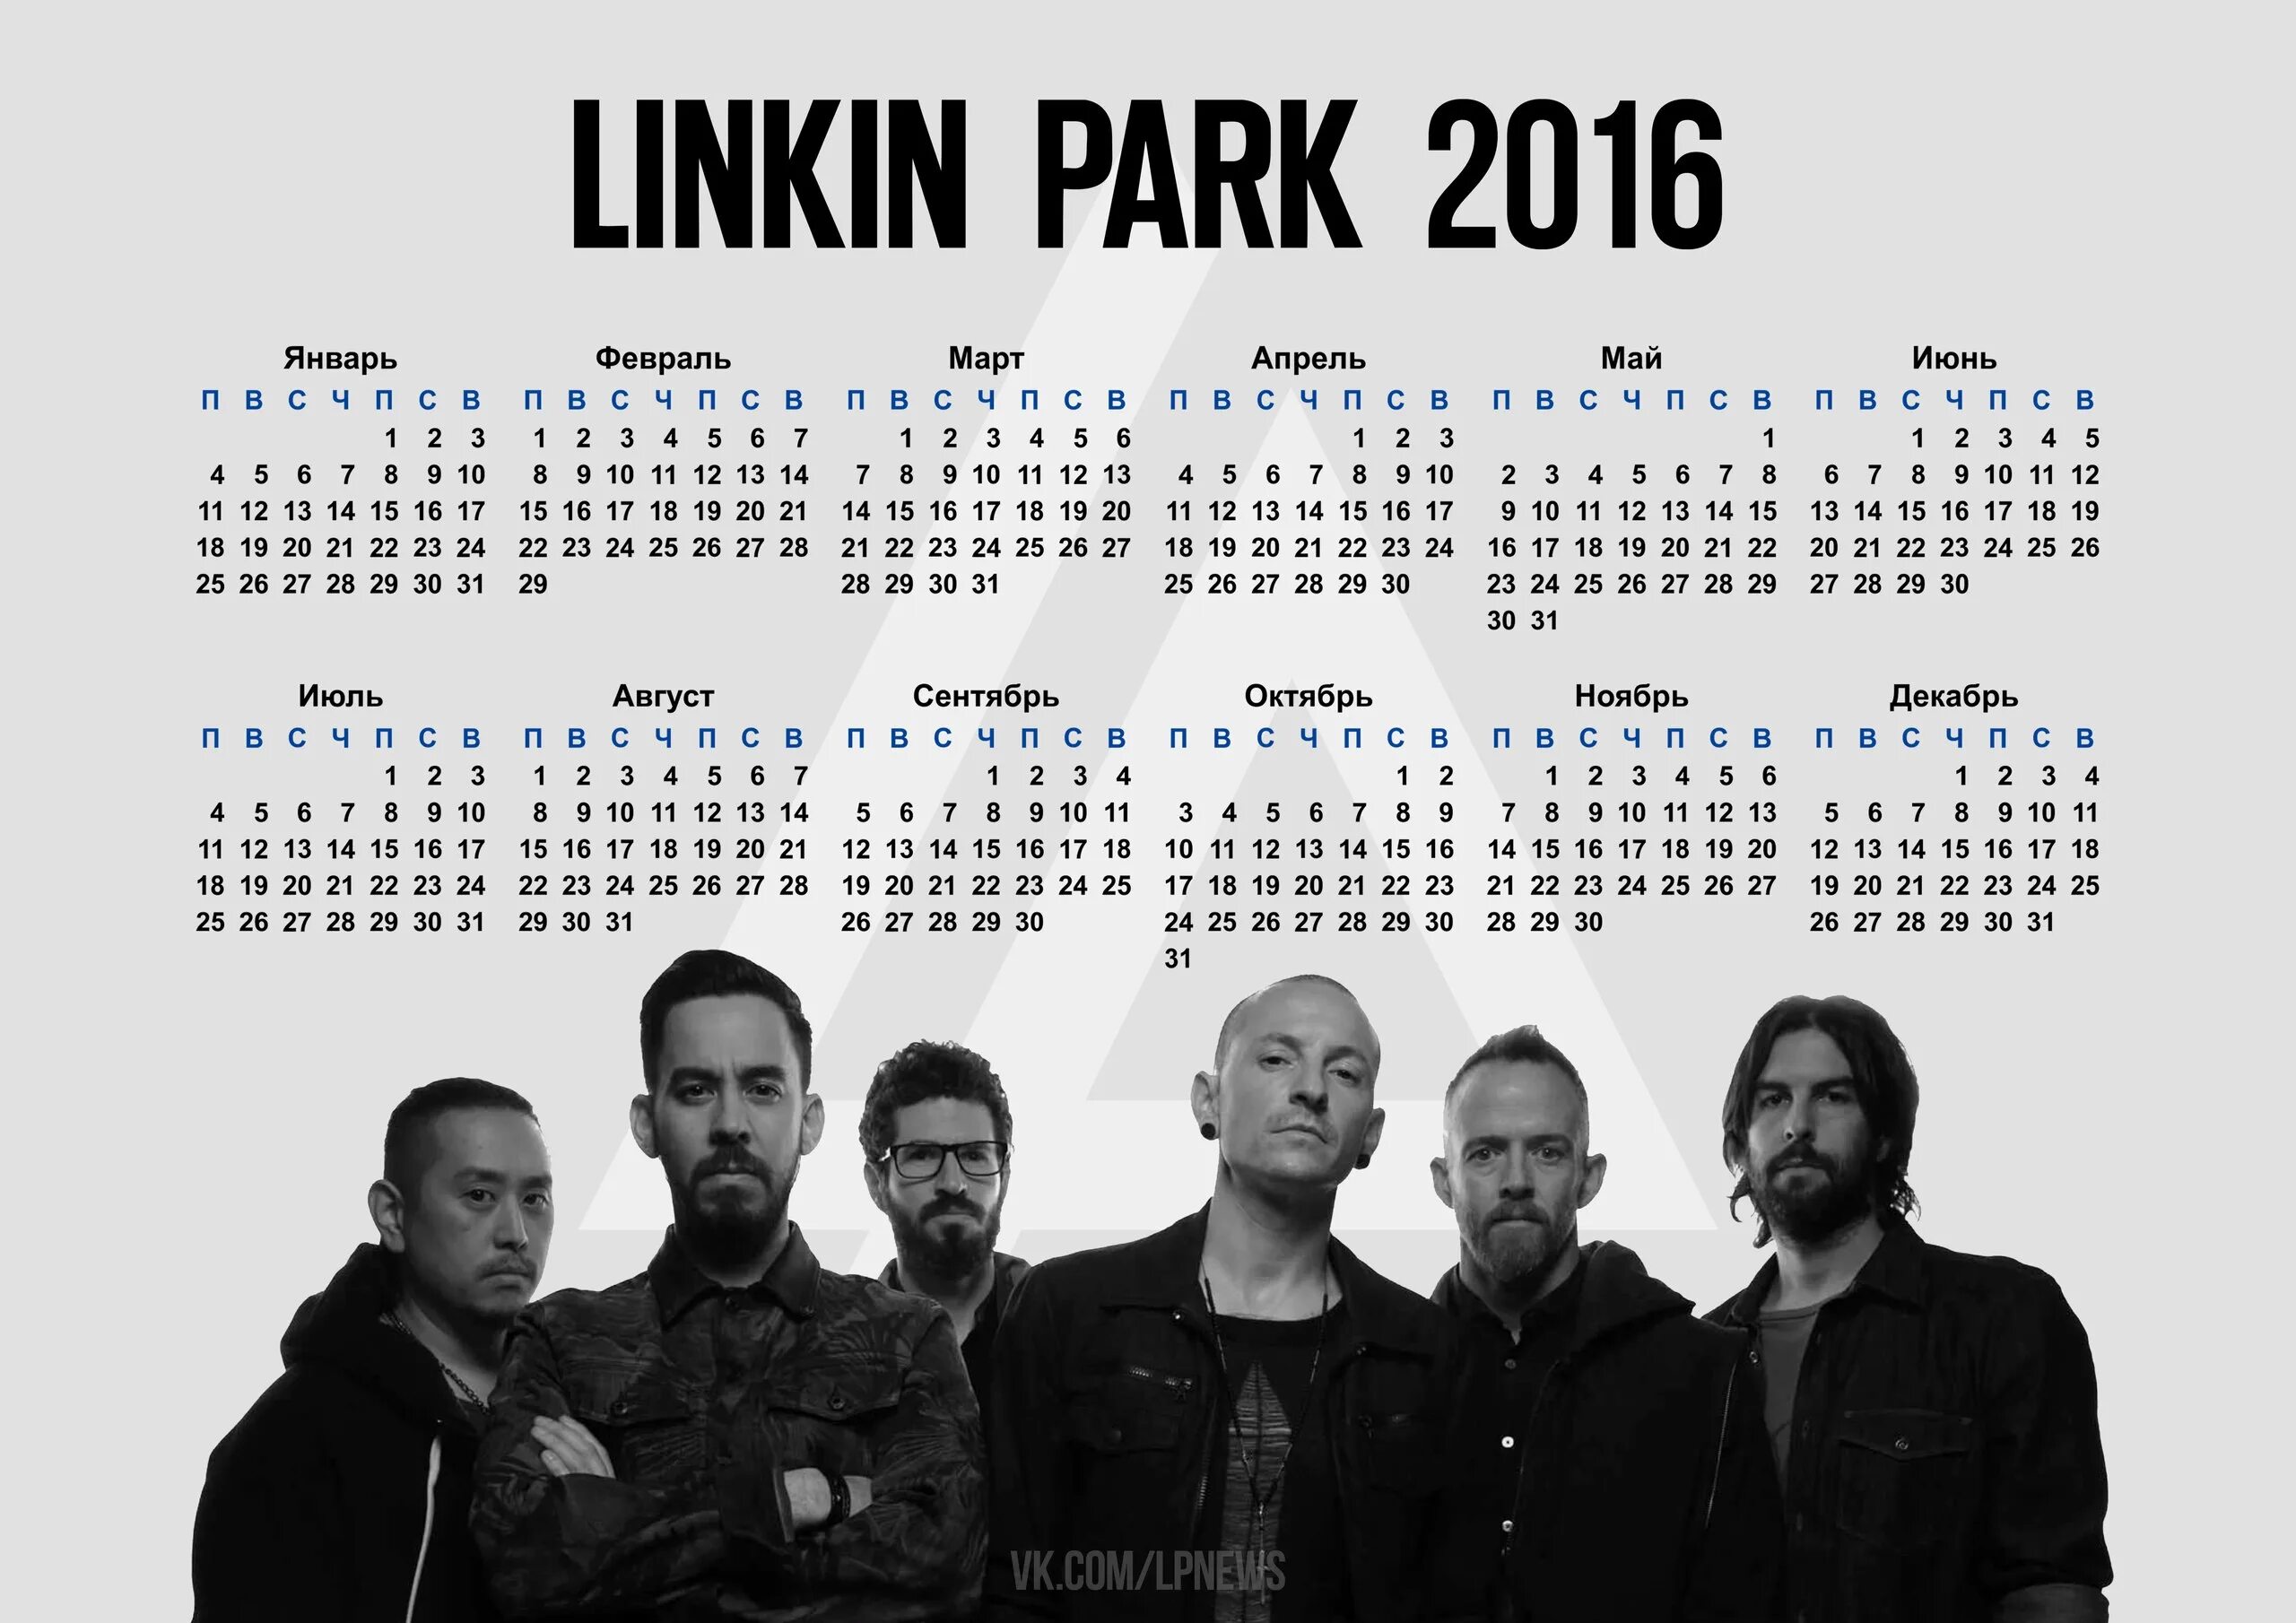 Линкин парк 2016. Linkin Park песни. Линкин парк альбомы. Линкин парк обложка. Песни линкин парк на русском